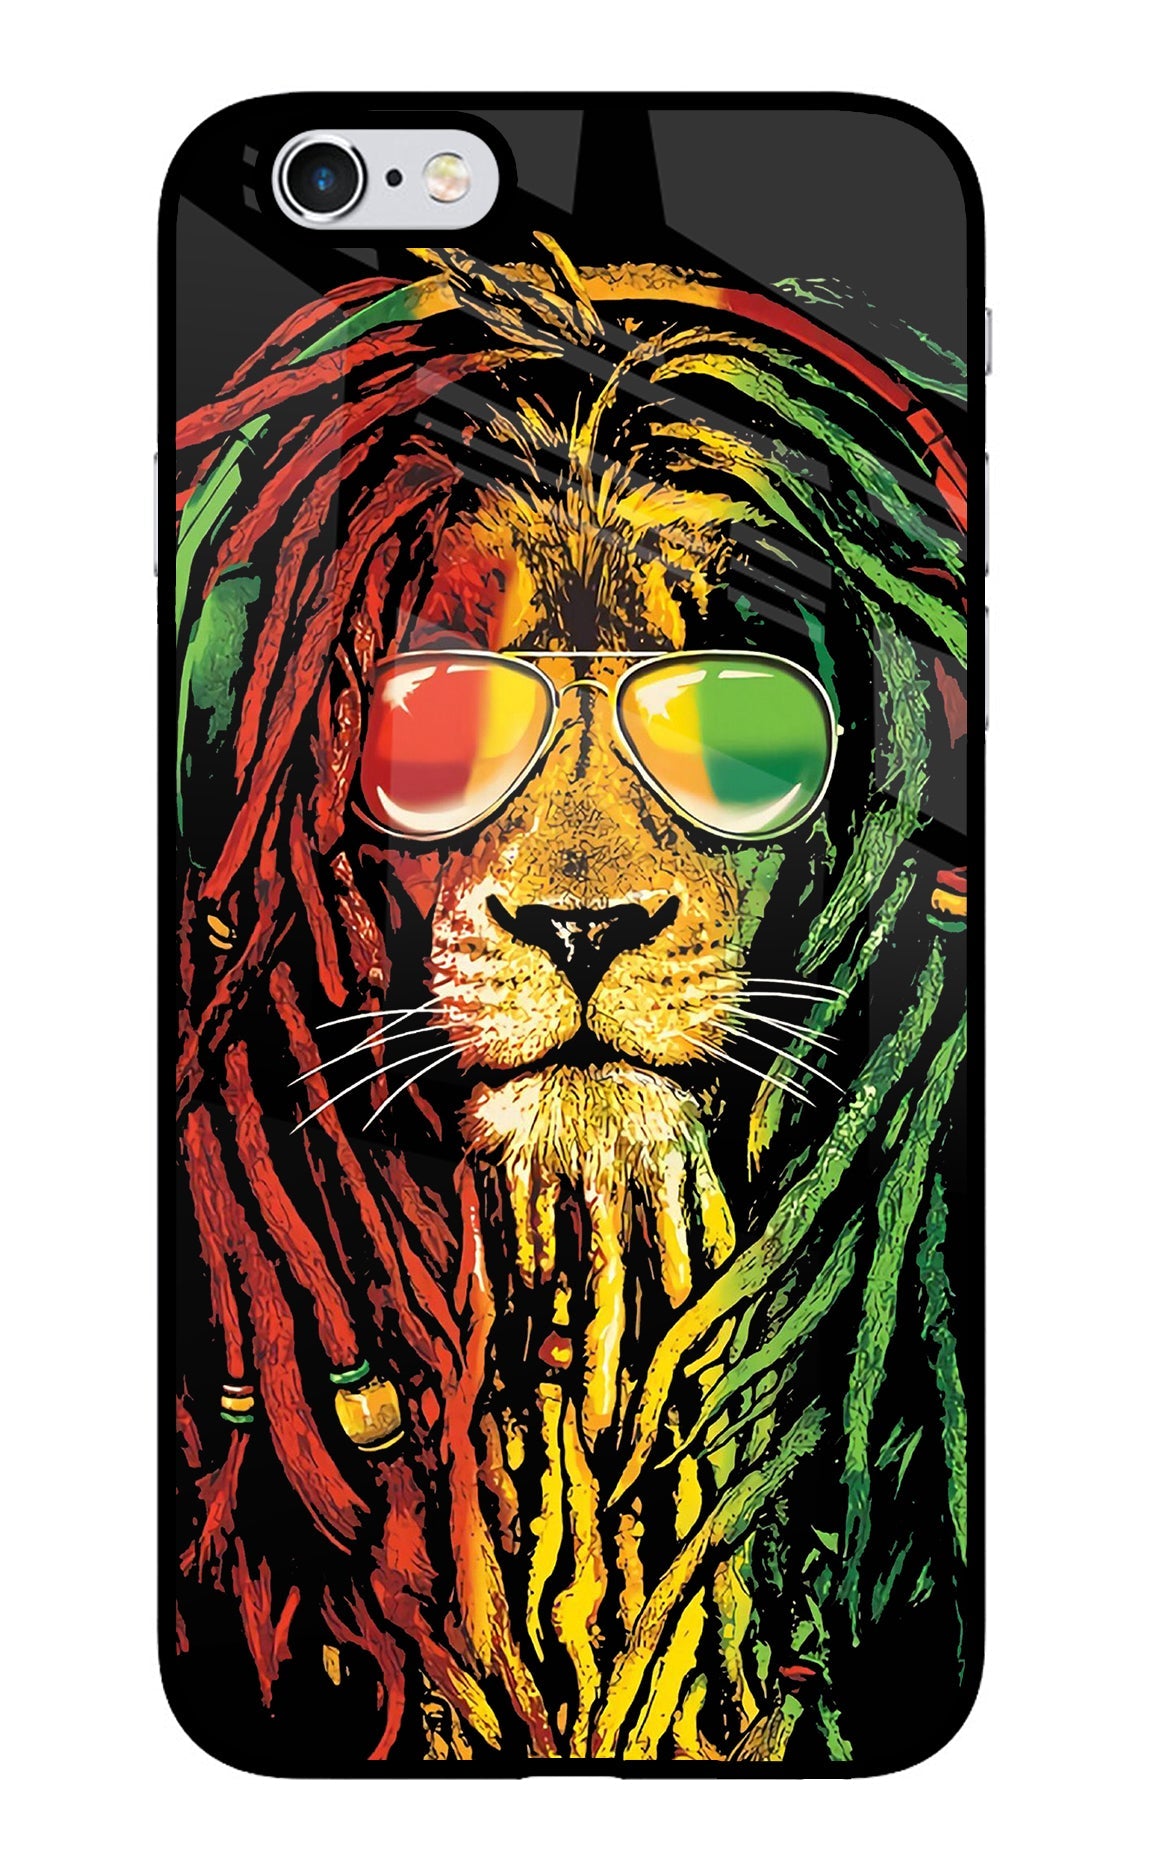 Rasta Lion iPhone 6/6s Glass Case